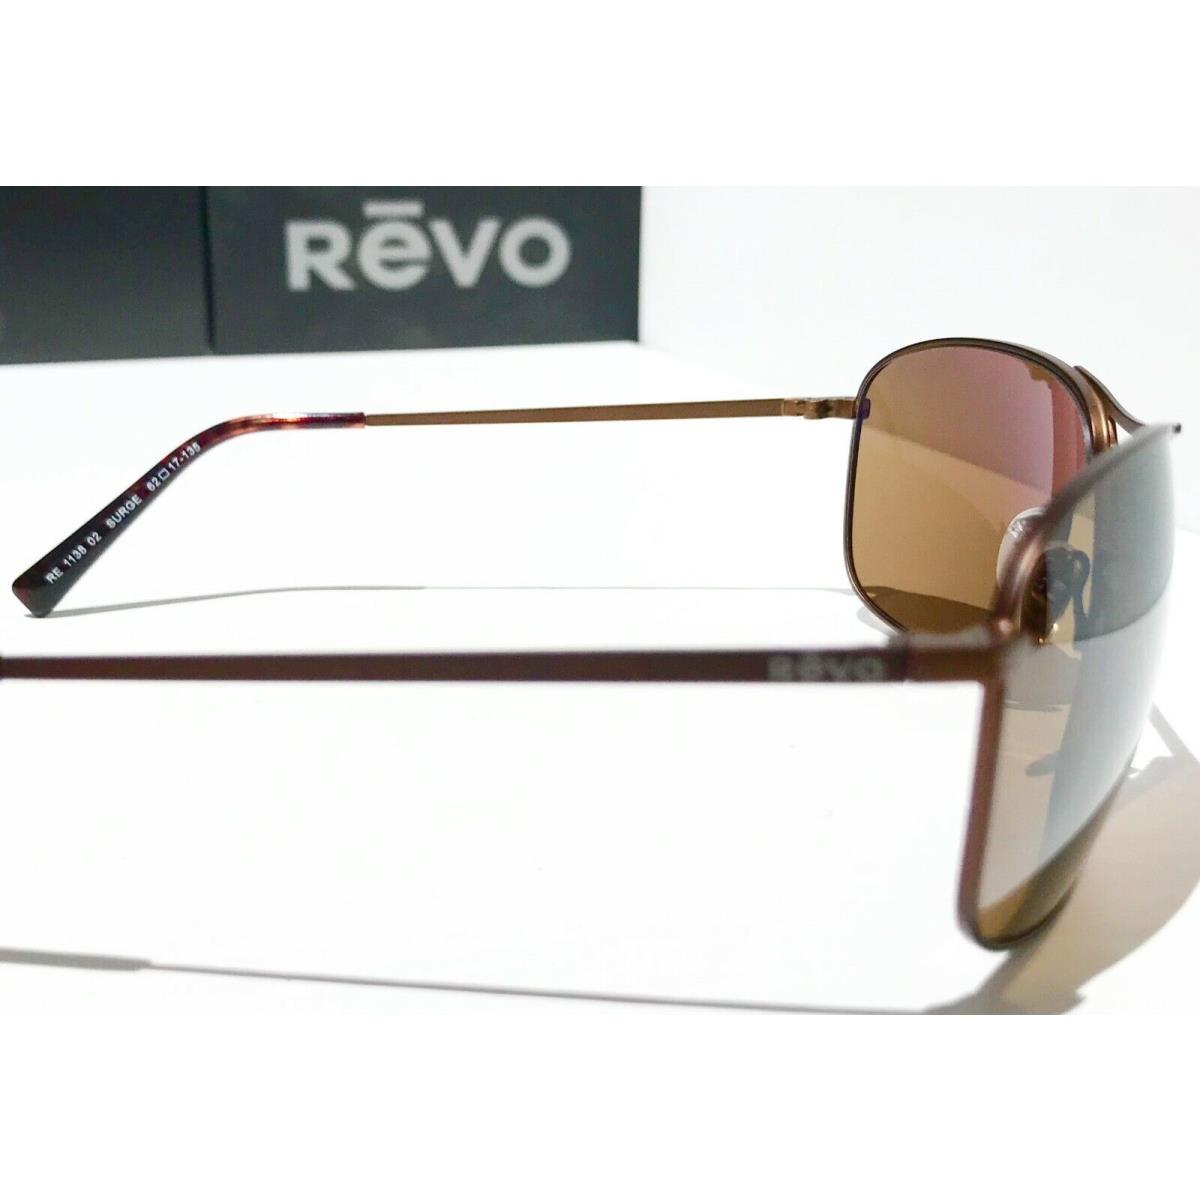 Revo sunglasses Surge - Brown Frame, Brown Lens